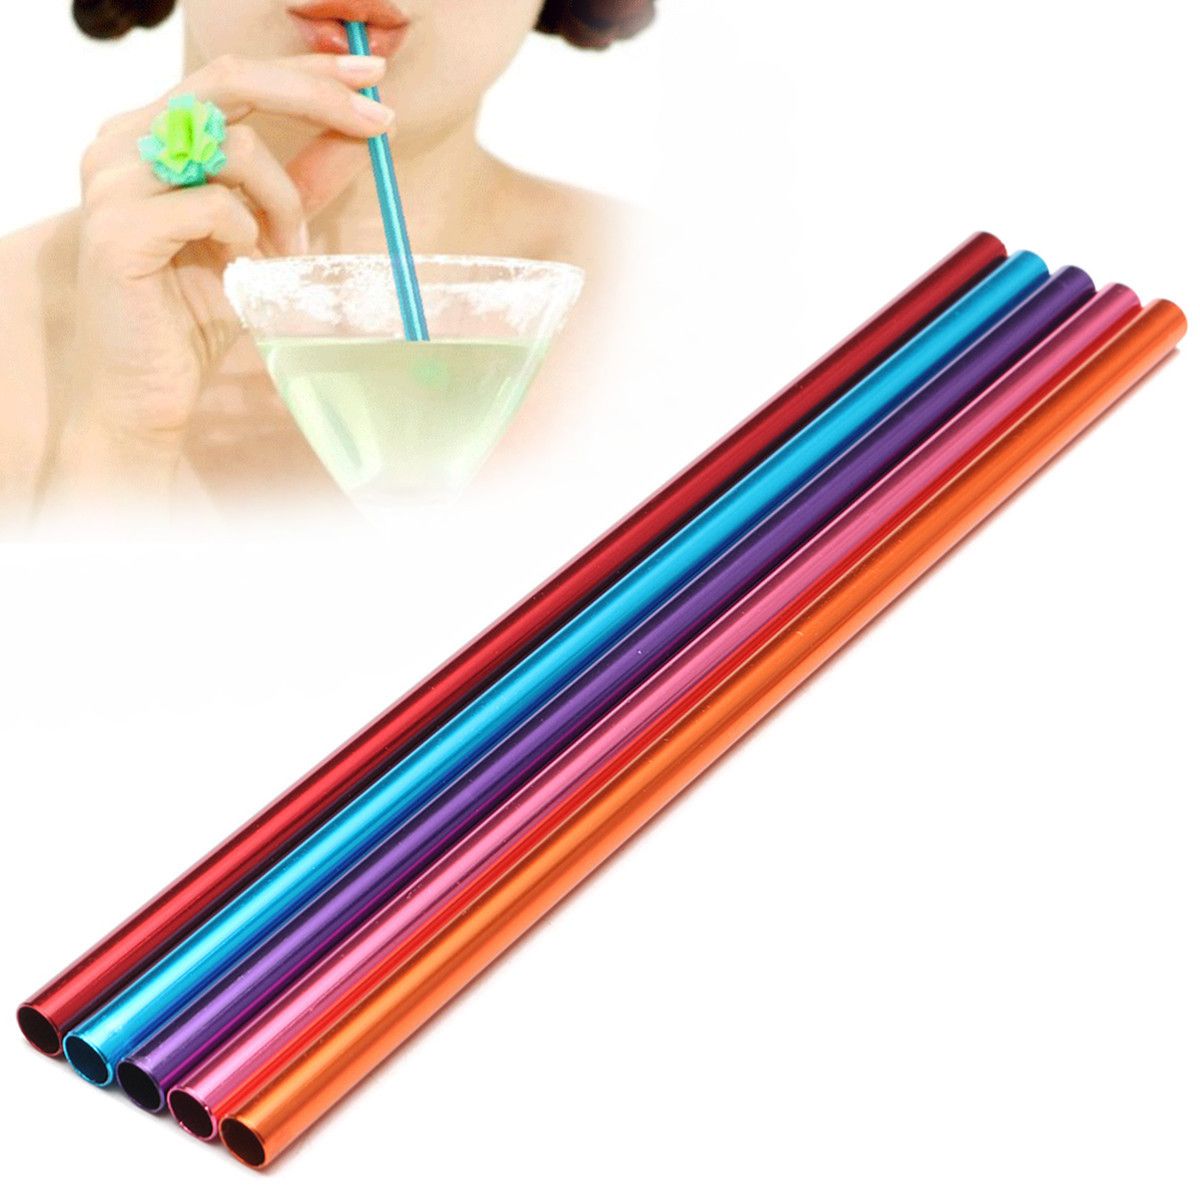 10PcsSet-Aluminum-Drinking-Straw-Straws-Reusable-Slurpee-Cocktail-Drinking-Straw-Party-Supplies-1466201